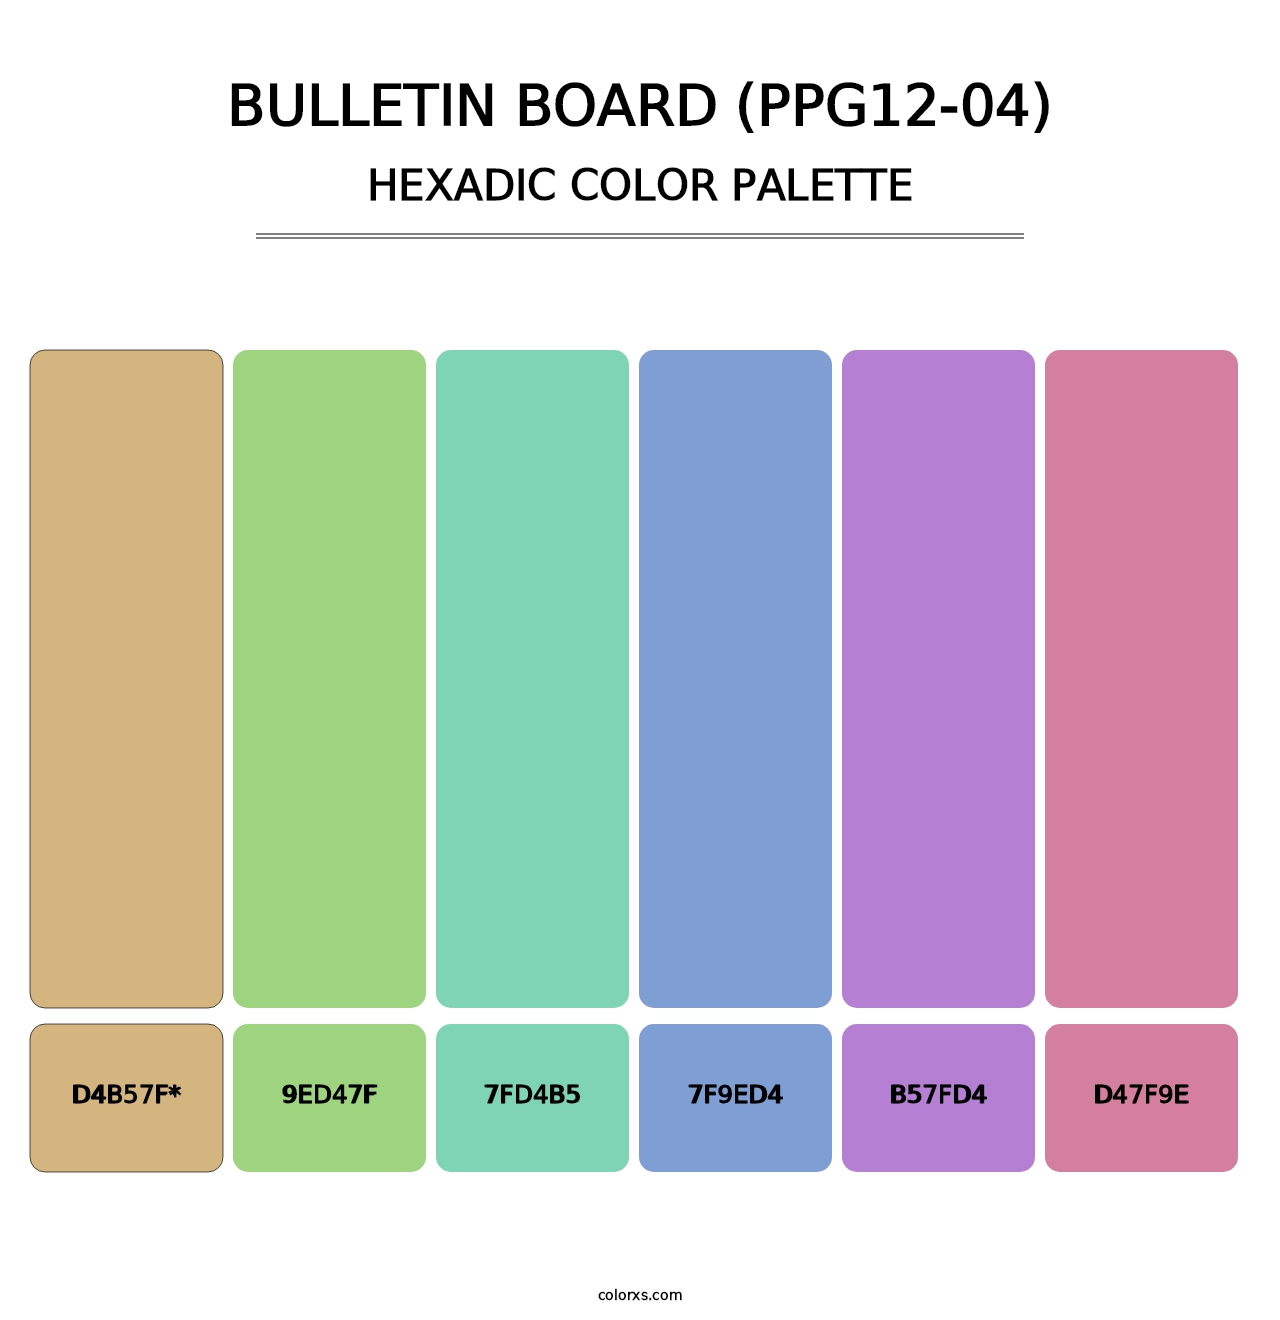 Bulletin Board (PPG12-04) - Hexadic Color Palette